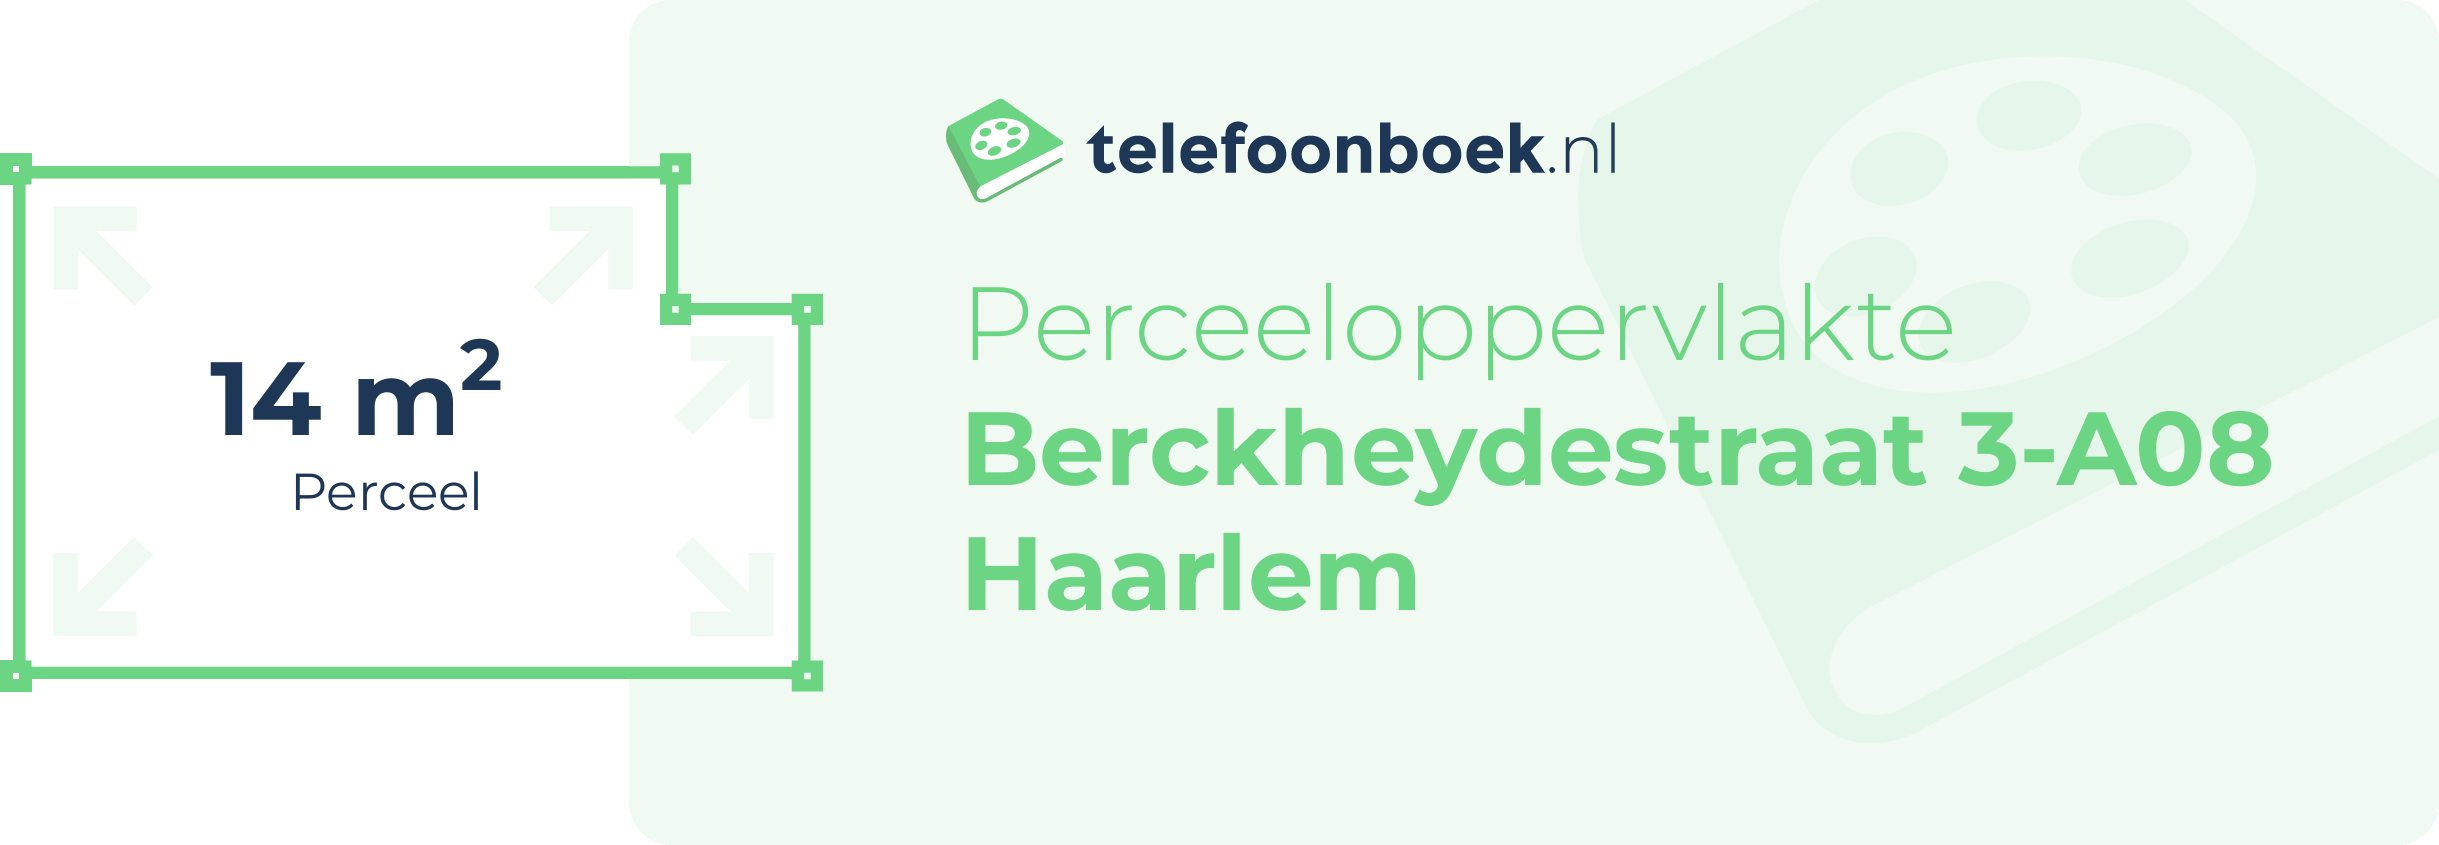 Perceeloppervlakte Berckheydestraat 3-A08 Haarlem